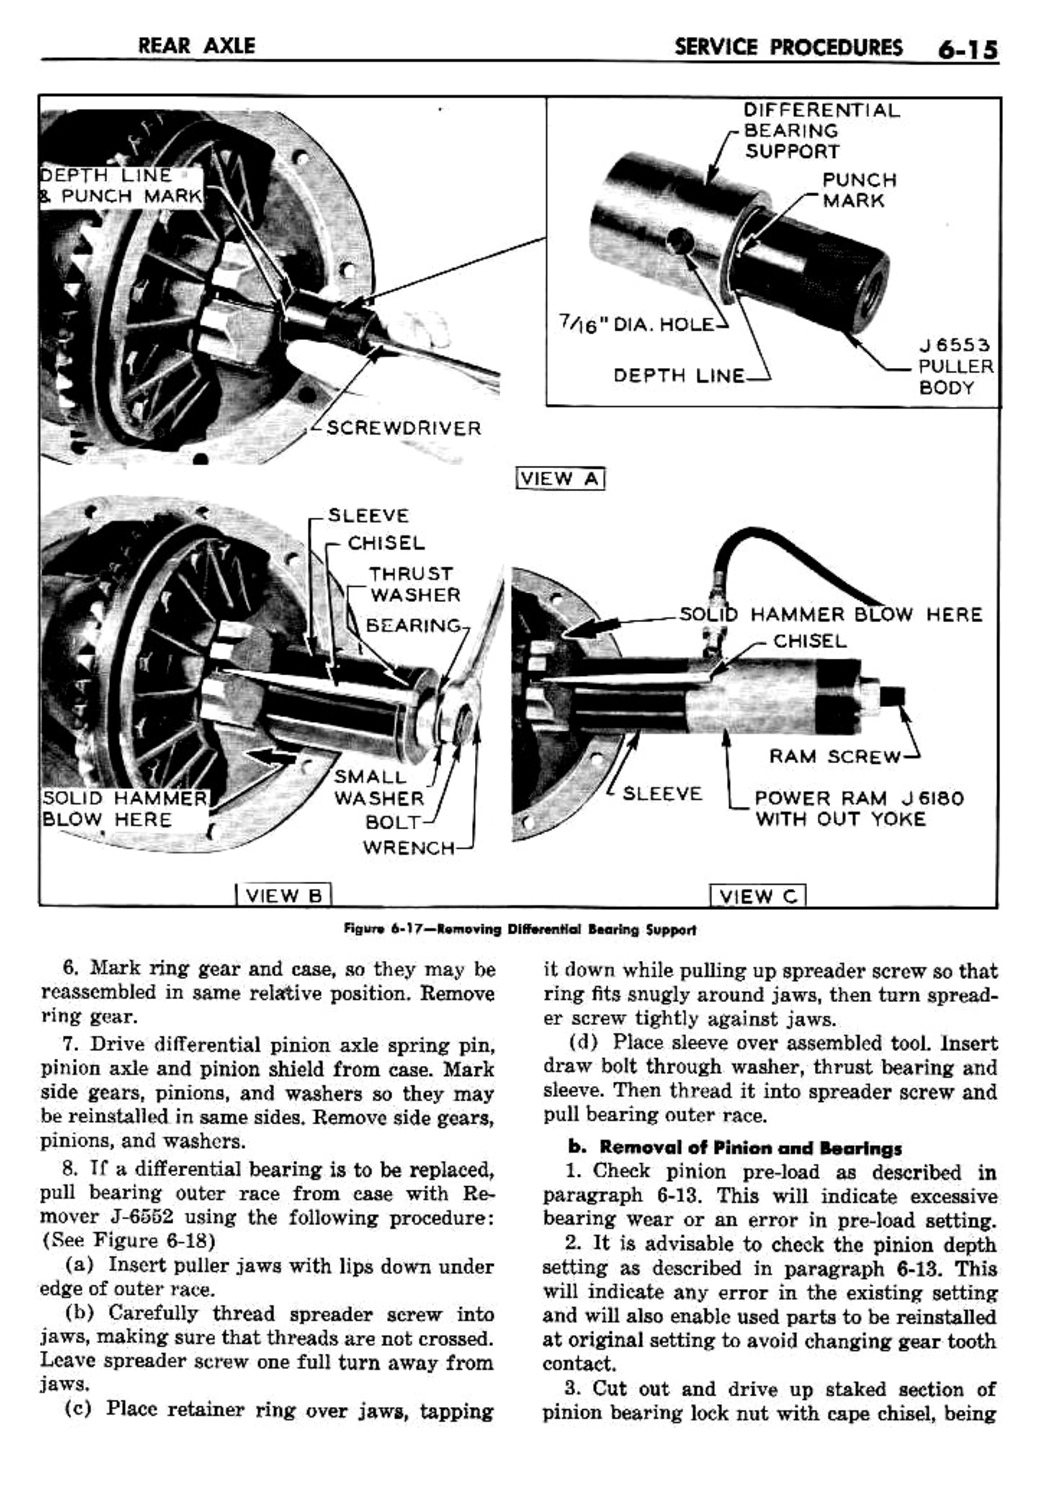 n_07 1960 Buick Shop Manual - Rear Axle-015-015.jpg